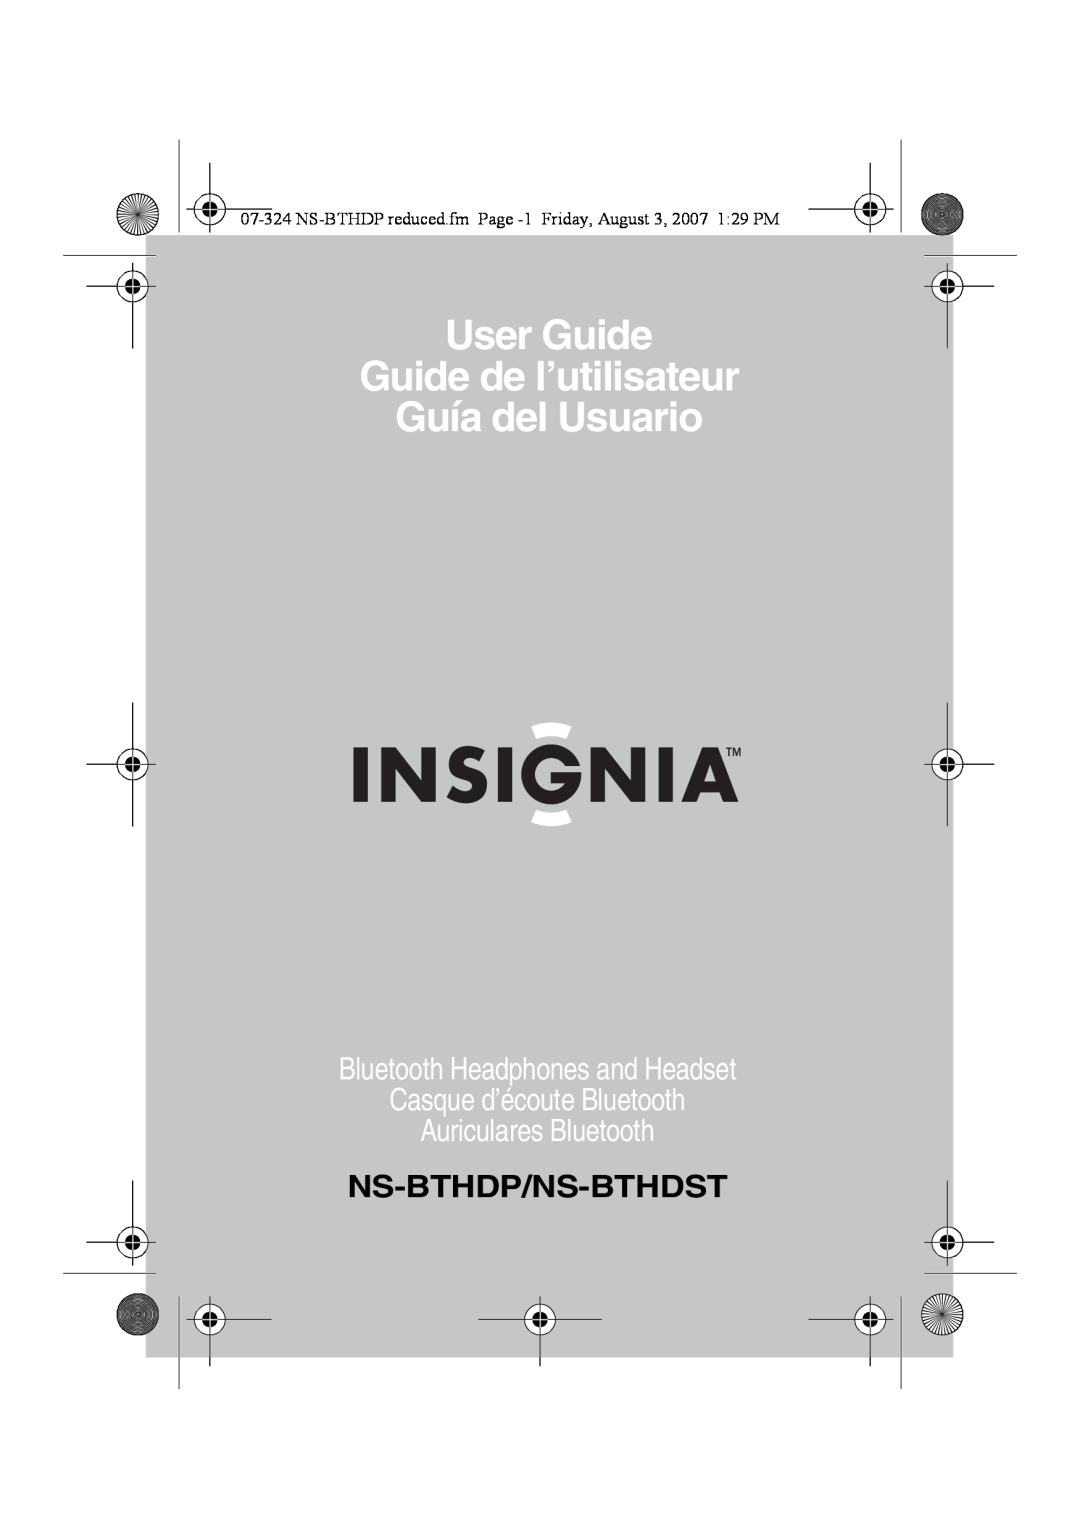 Insignia NS-BTHDST manual Ns-Bthdp/Ns-Bthdst, User Guide Guide de l’utilisateur, Guía del Usuario 